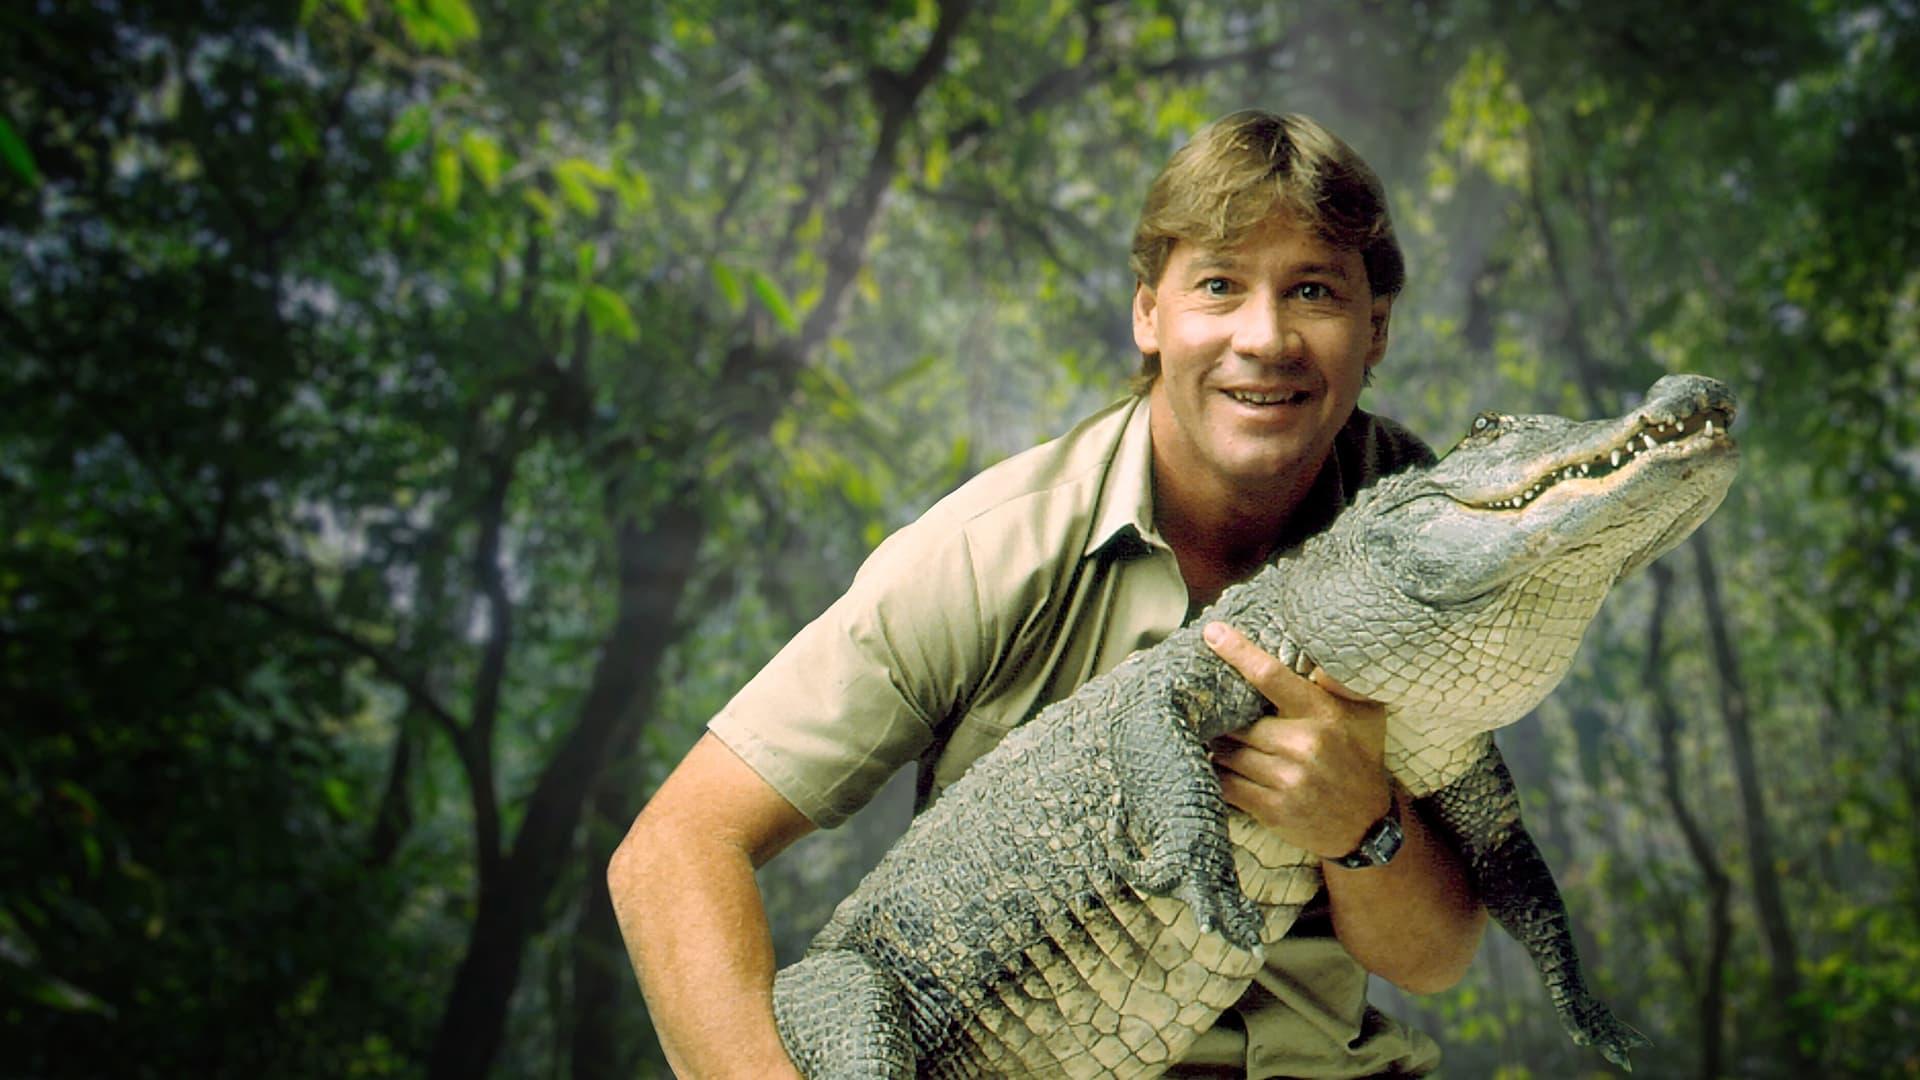 The Crocodile Hunter backdrop